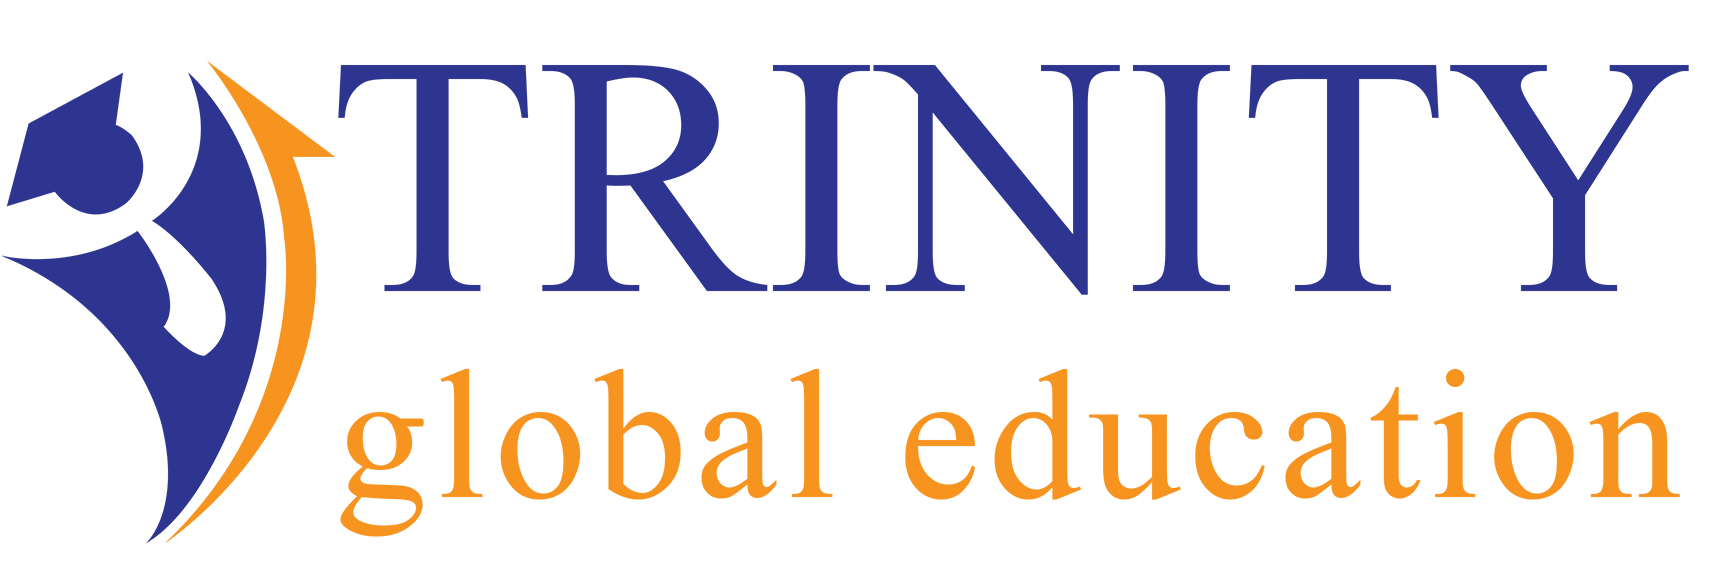 Trinity Global Education|Schools|Education